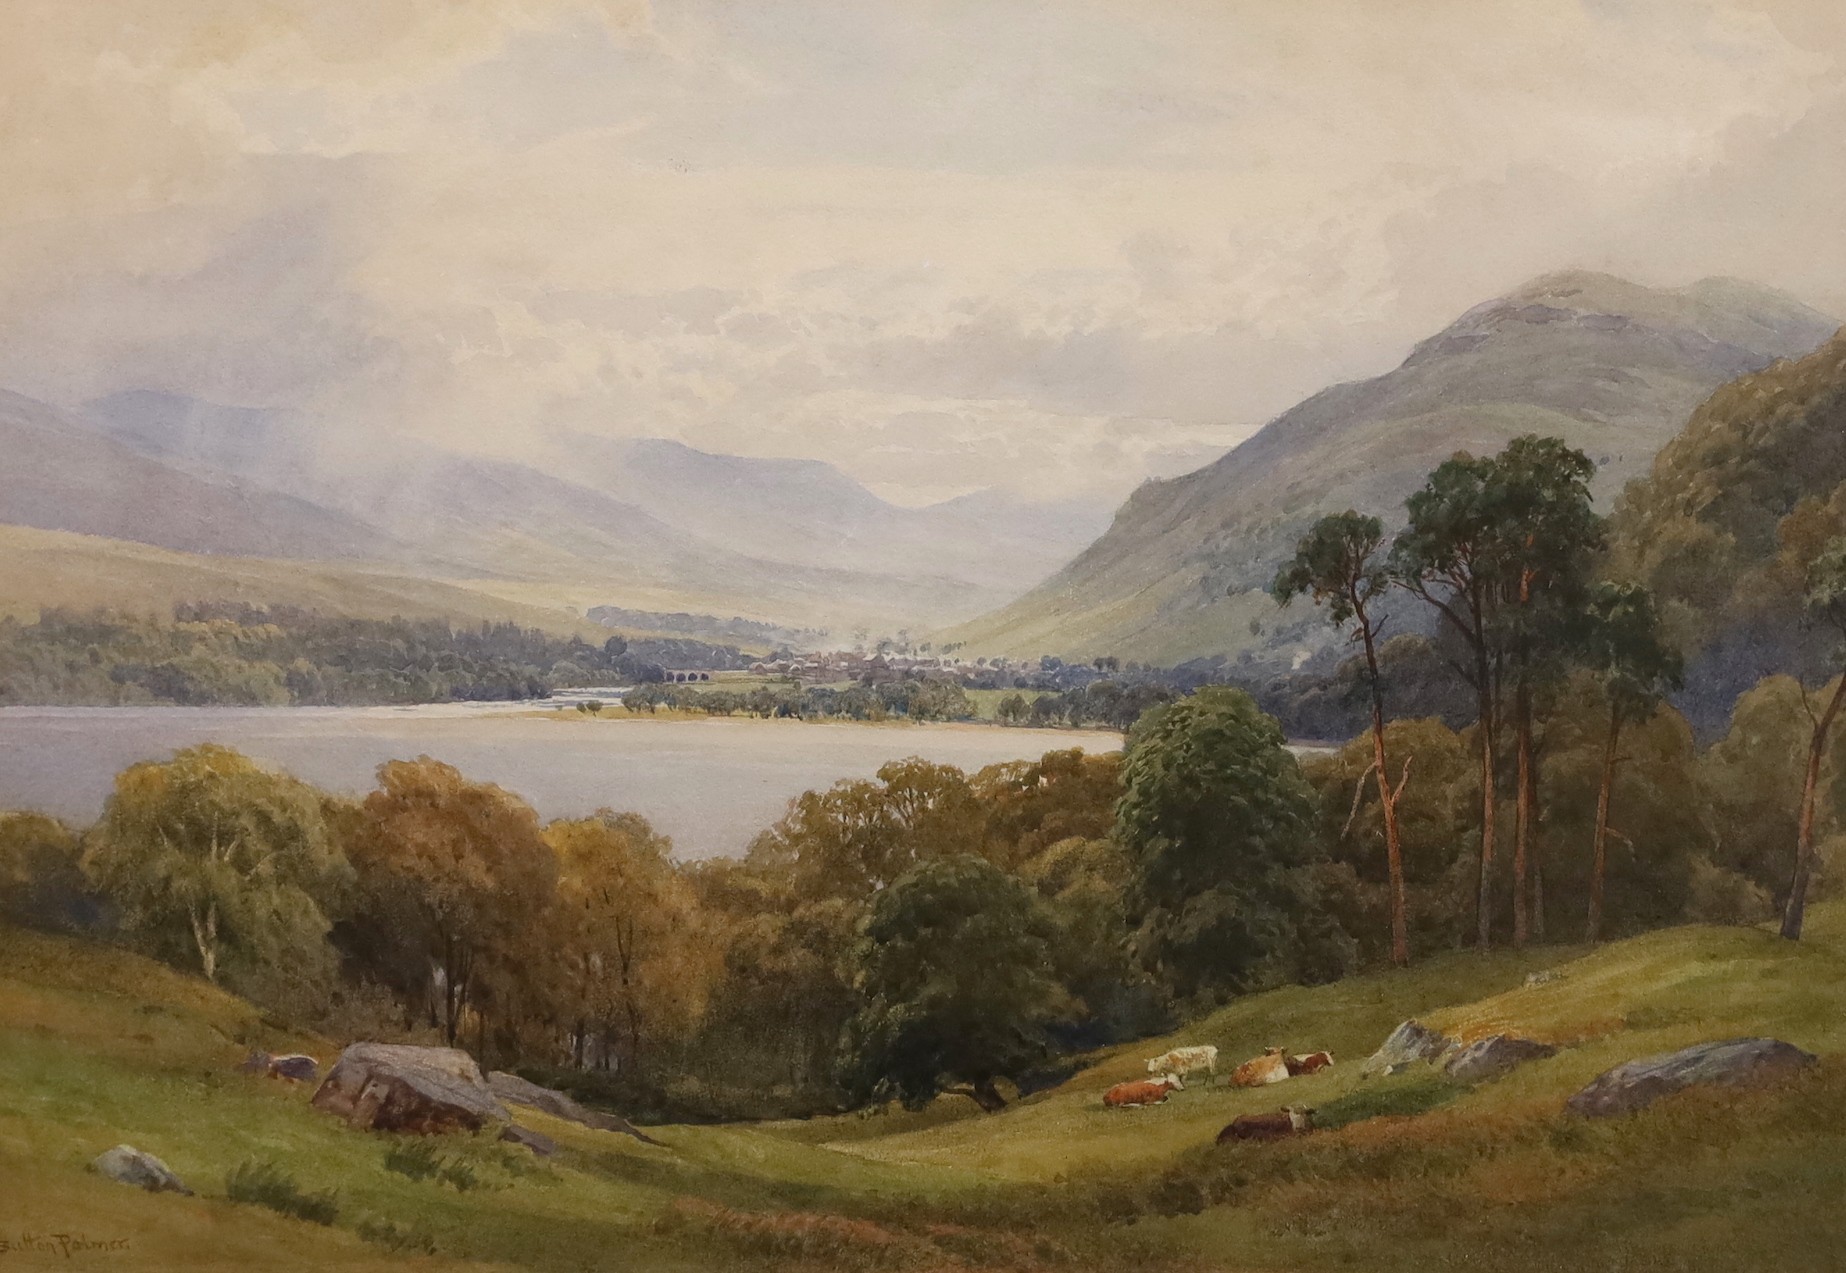 Harry Sutton Palmer RBA, RI. (British, 1854-1933), 'Killin, Head of Loch Tay', watercolour, 35 x 52cm